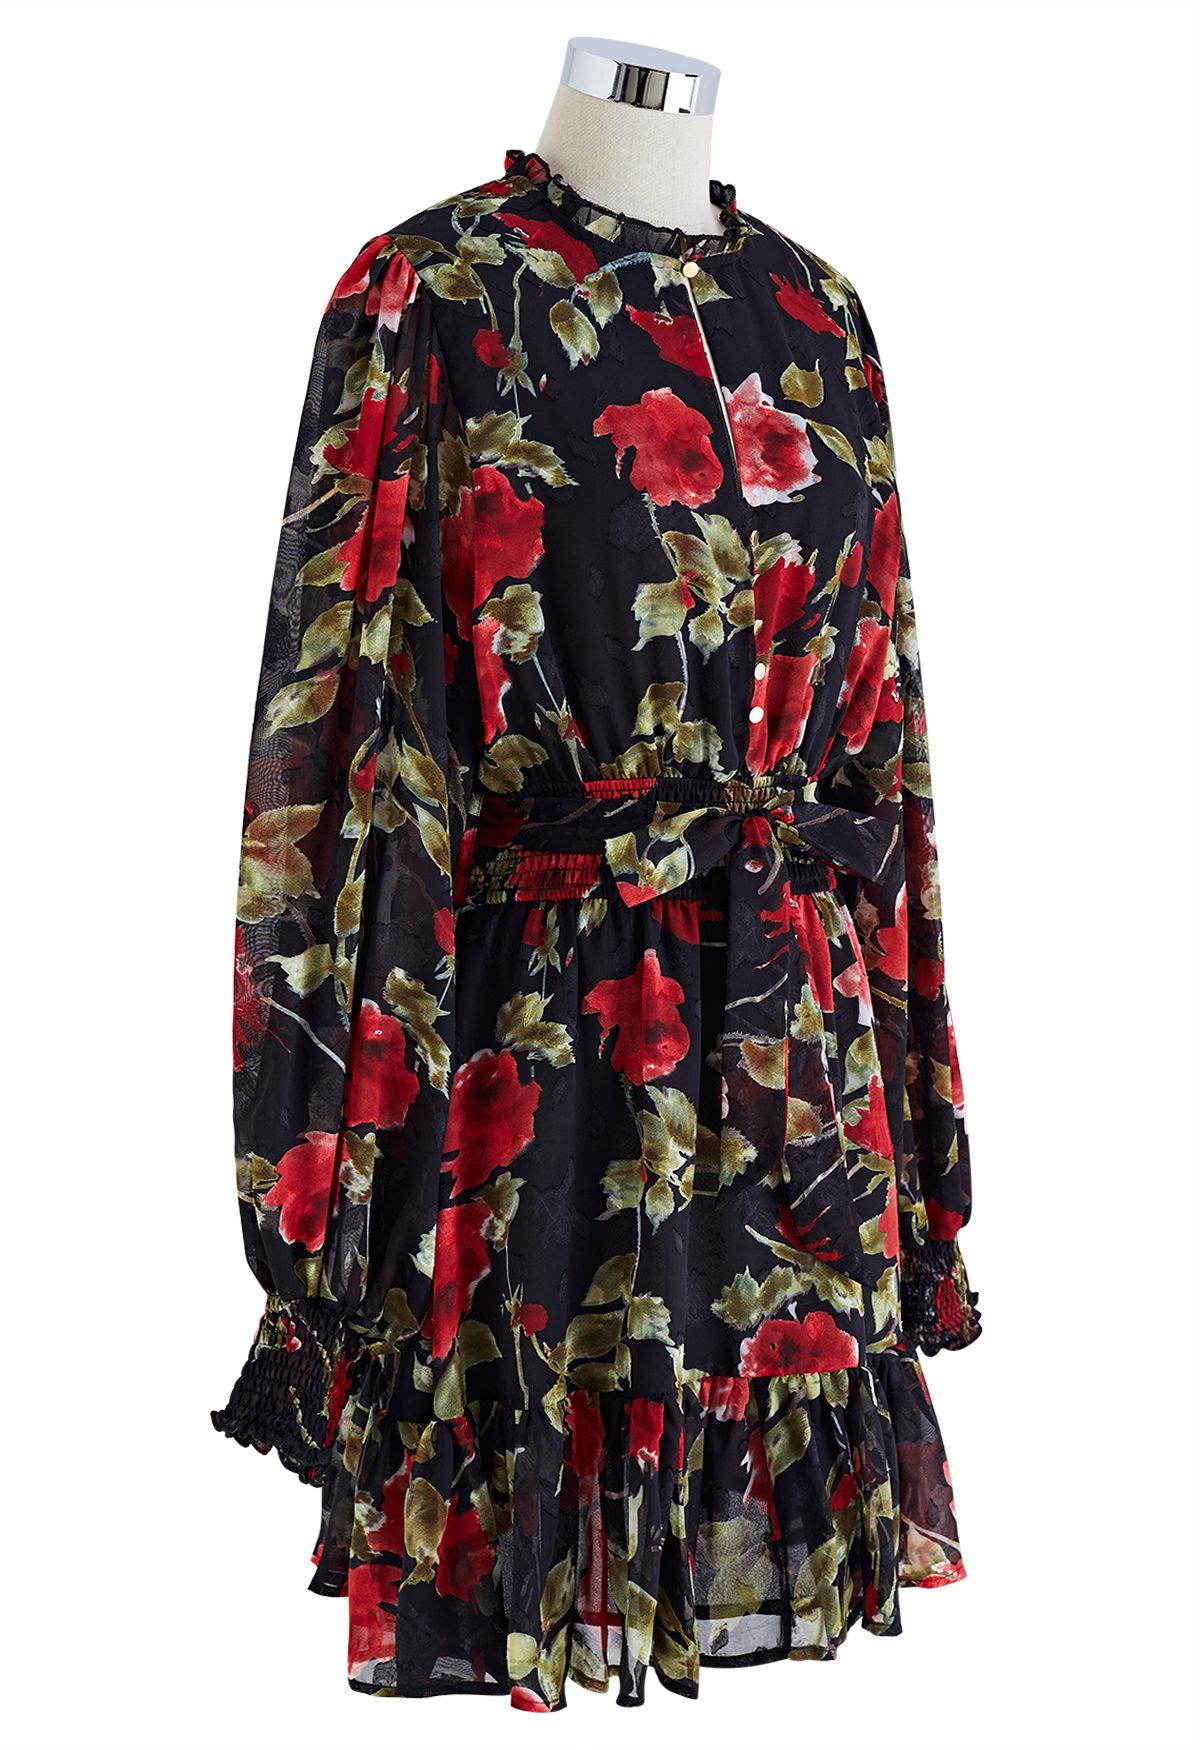 Floral Jacquard Ruffle Buttoned Chiffon Dress in Black